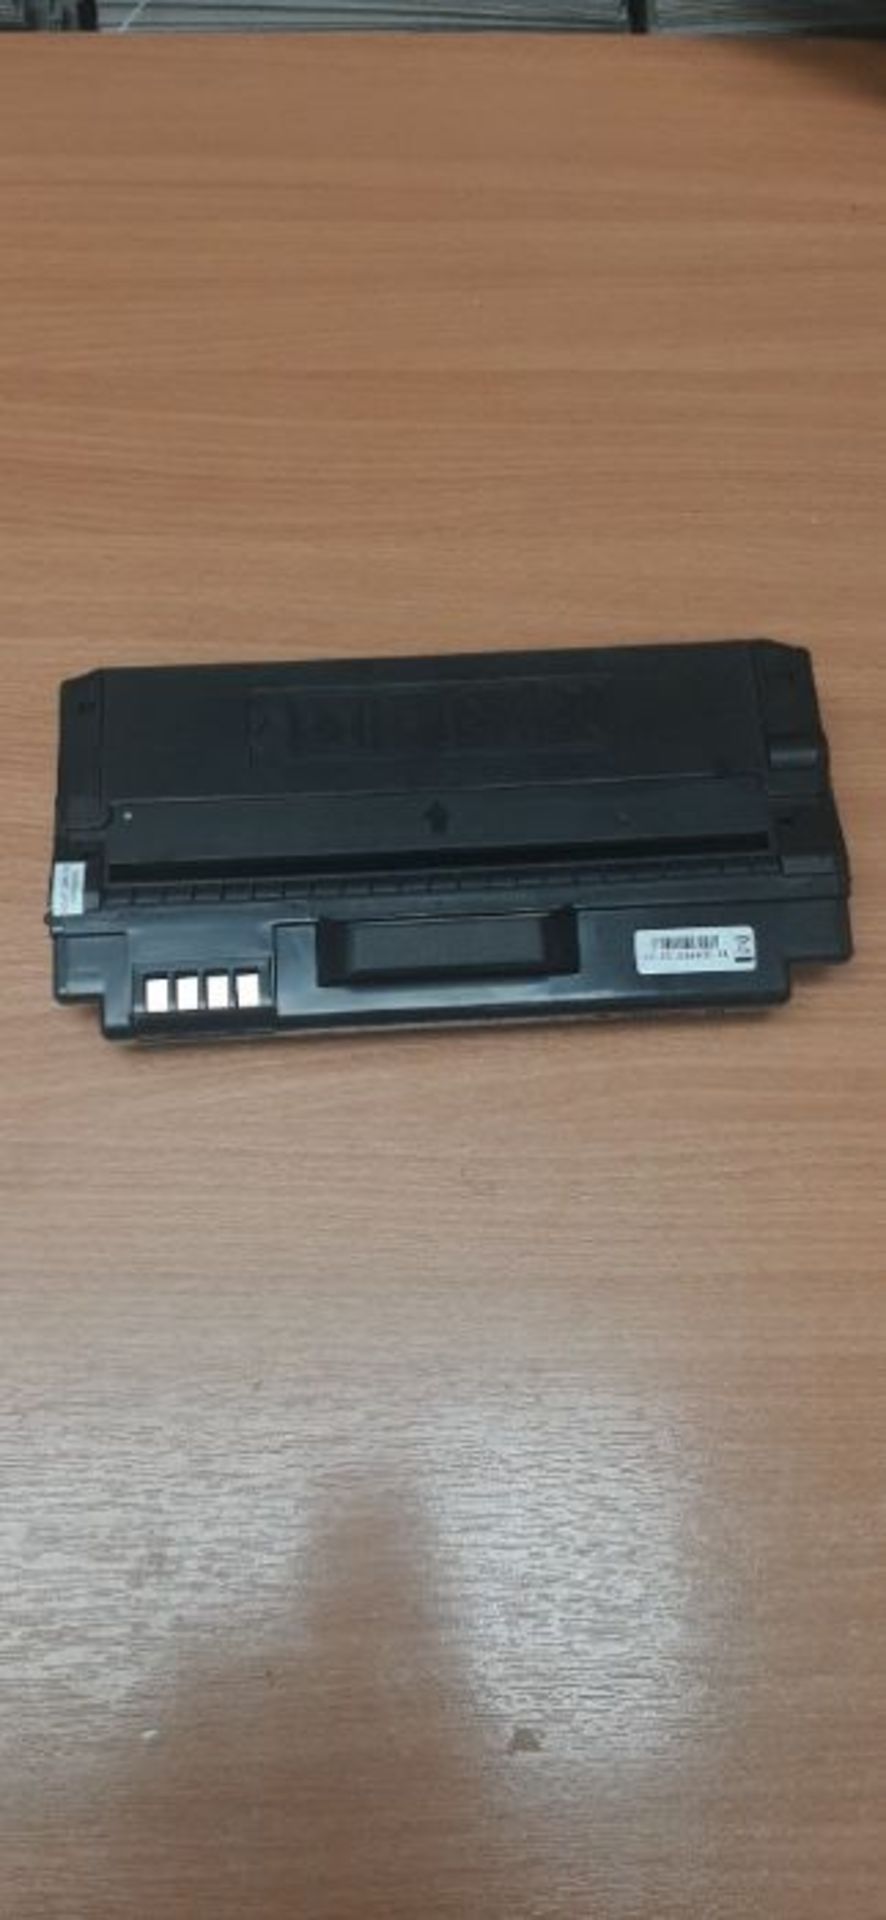 Compatible Toner Cartridge for Samsung ML-1630 ML-1630W SCX-4500 SCX-4500W - Black, Hi - Image 2 of 2